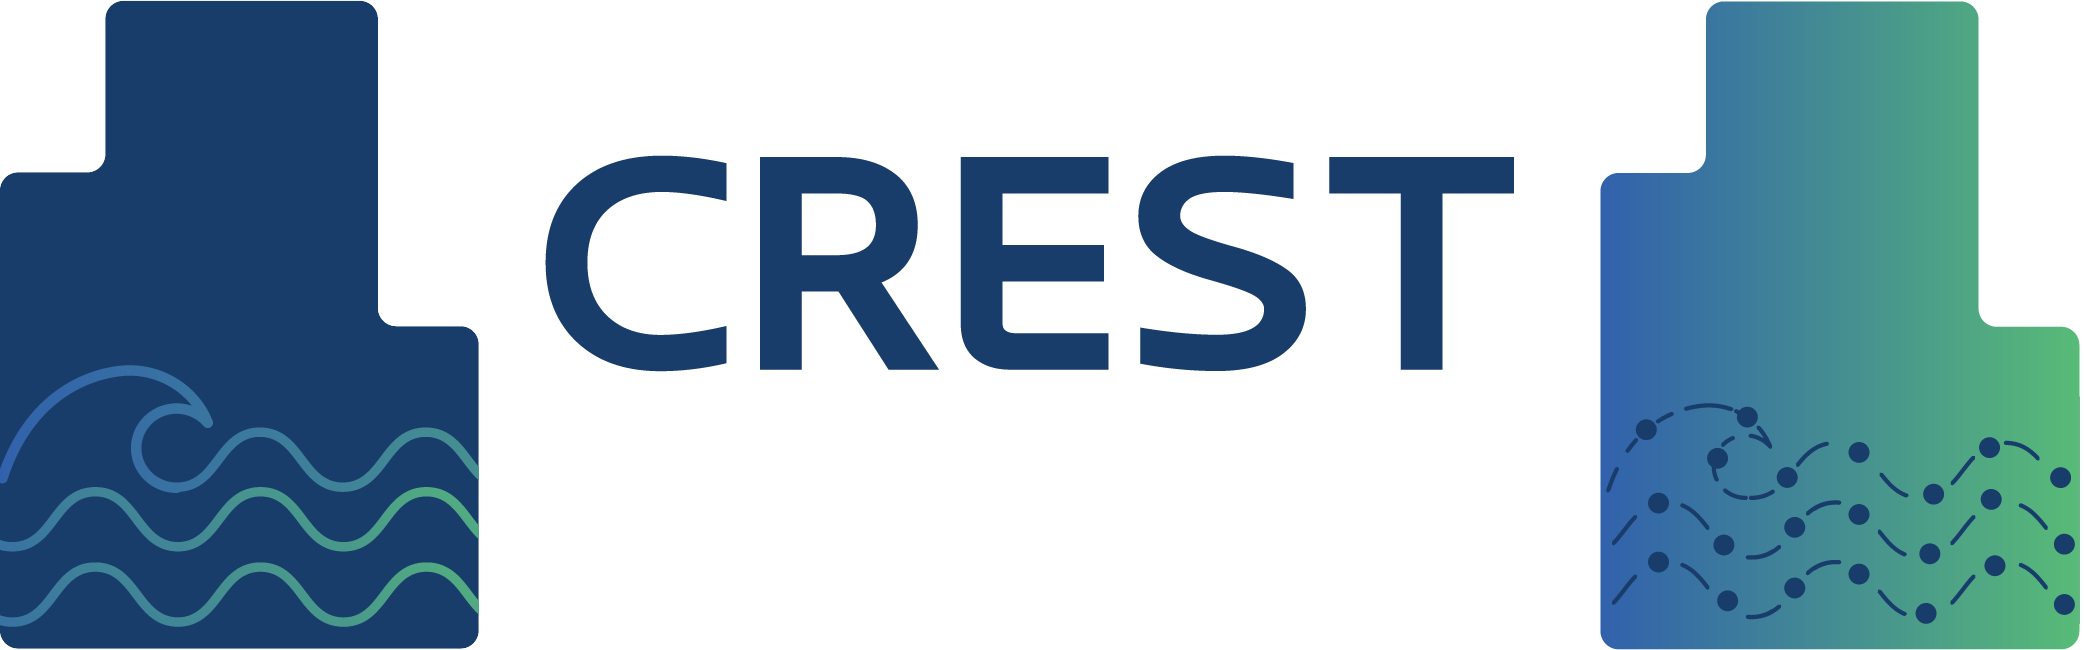 CrestProject